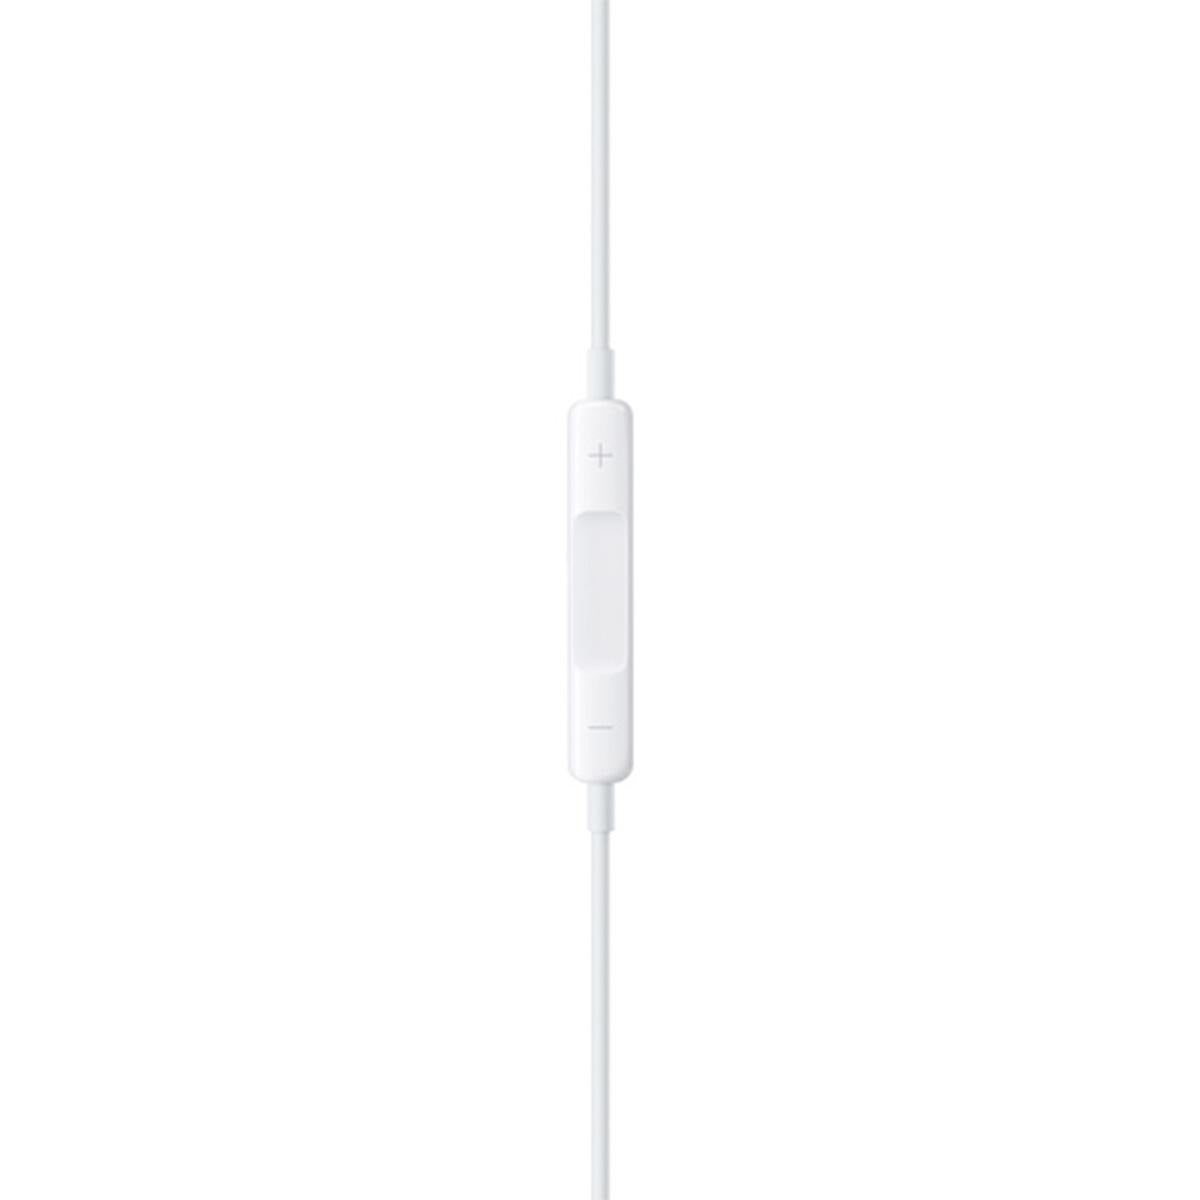 Apple Original EarPods with 3.5mm Headphone Plug